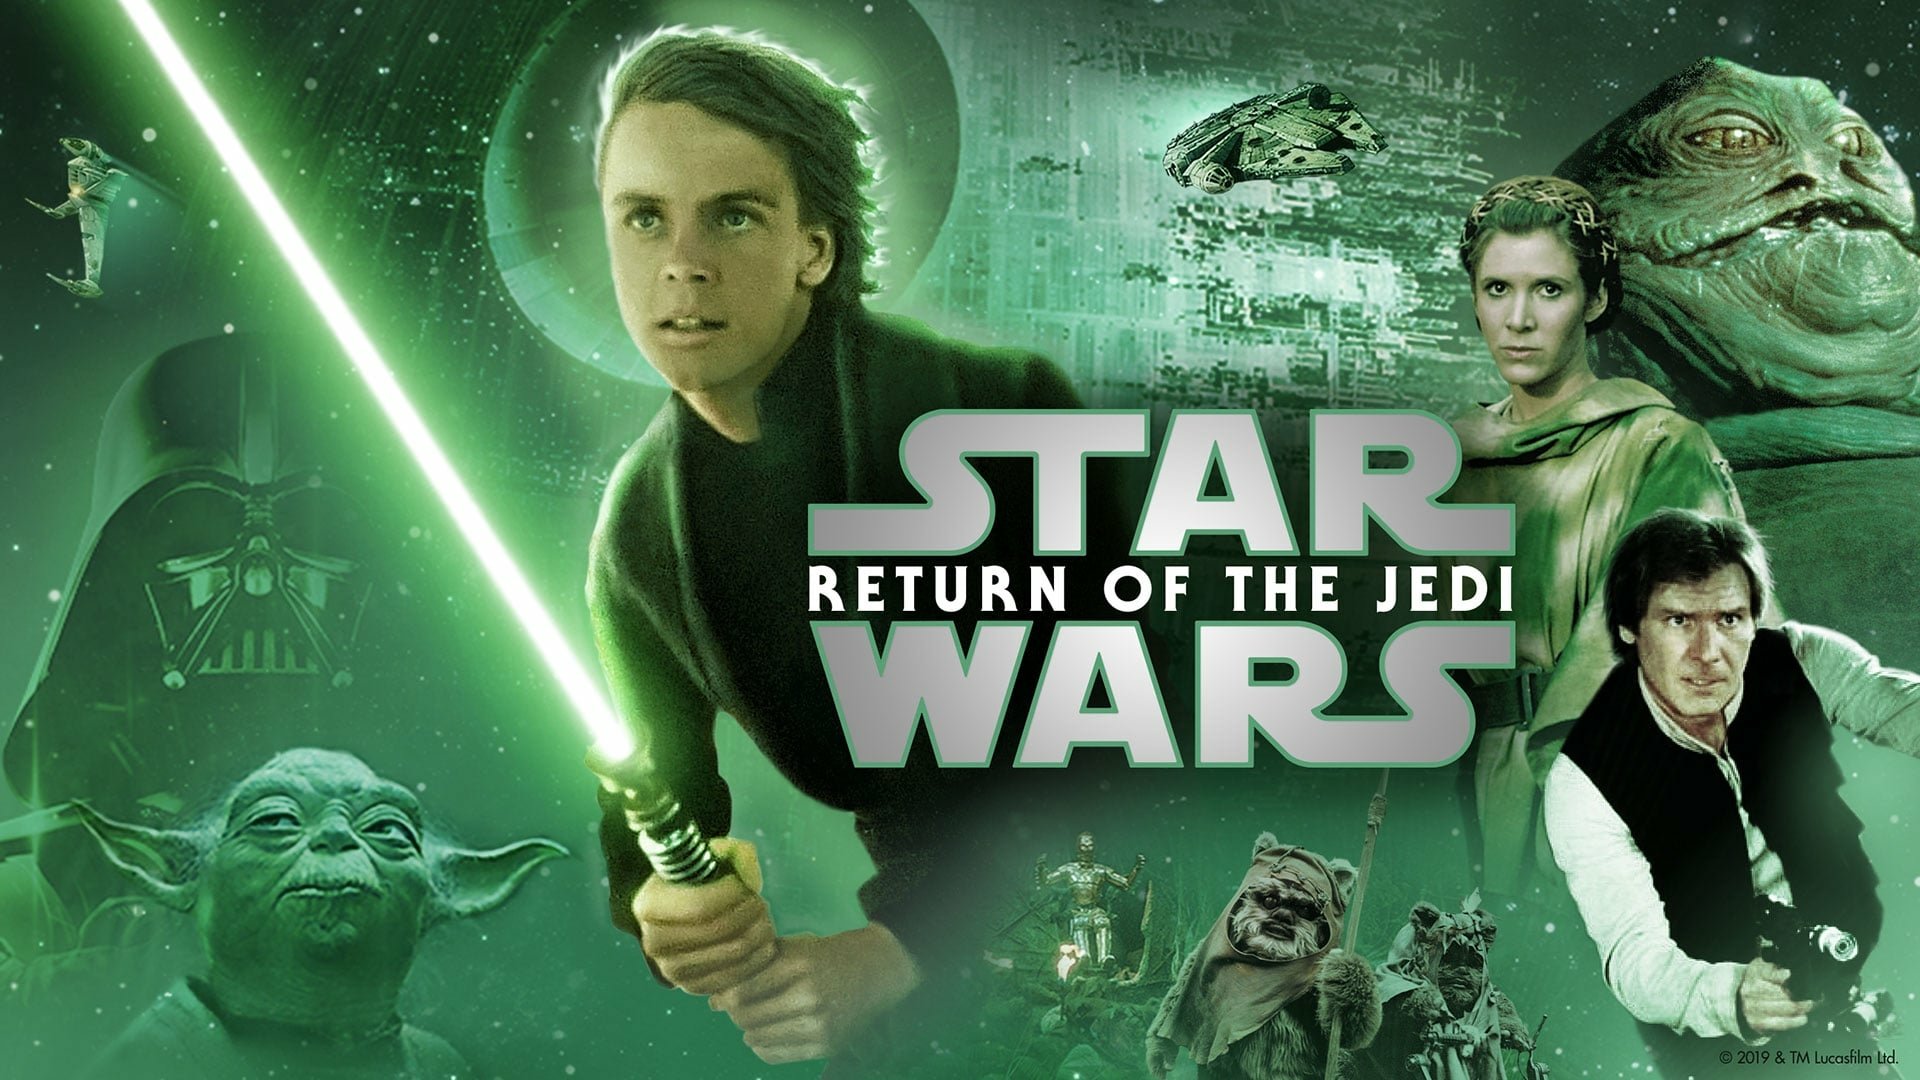 Star Wars Episode Vi Return Of The Jedi Hd Wallpaper Background Image 1920x1080 Id 1115523 Wallpaper Abyss